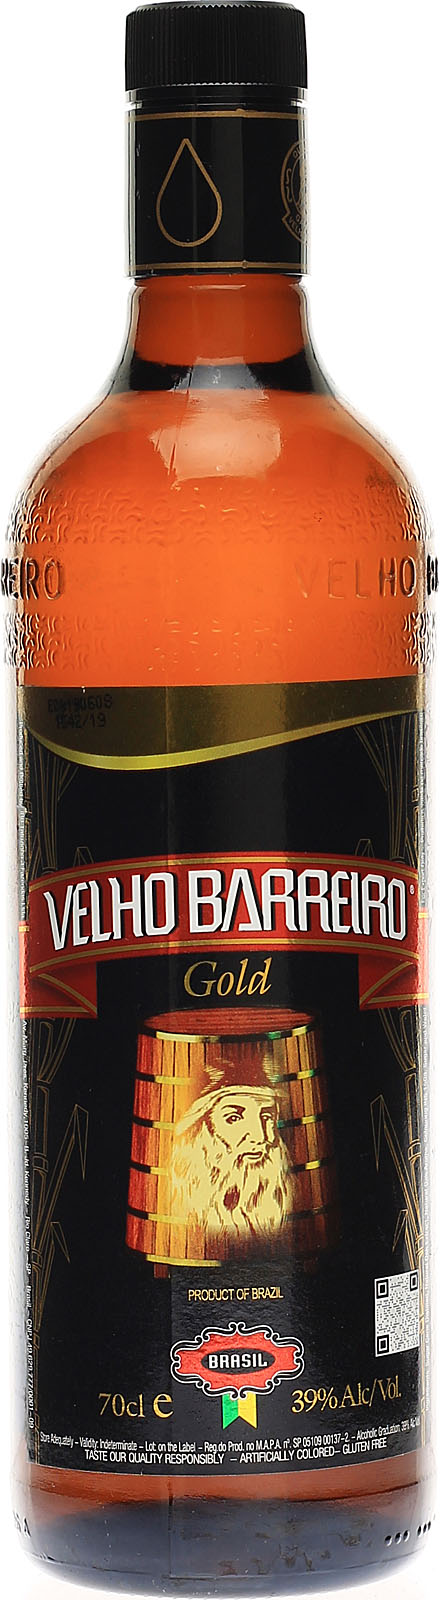 Velho Barreiro Gold Cachaca Vol 0,7 39% Liter (3 Jahre)